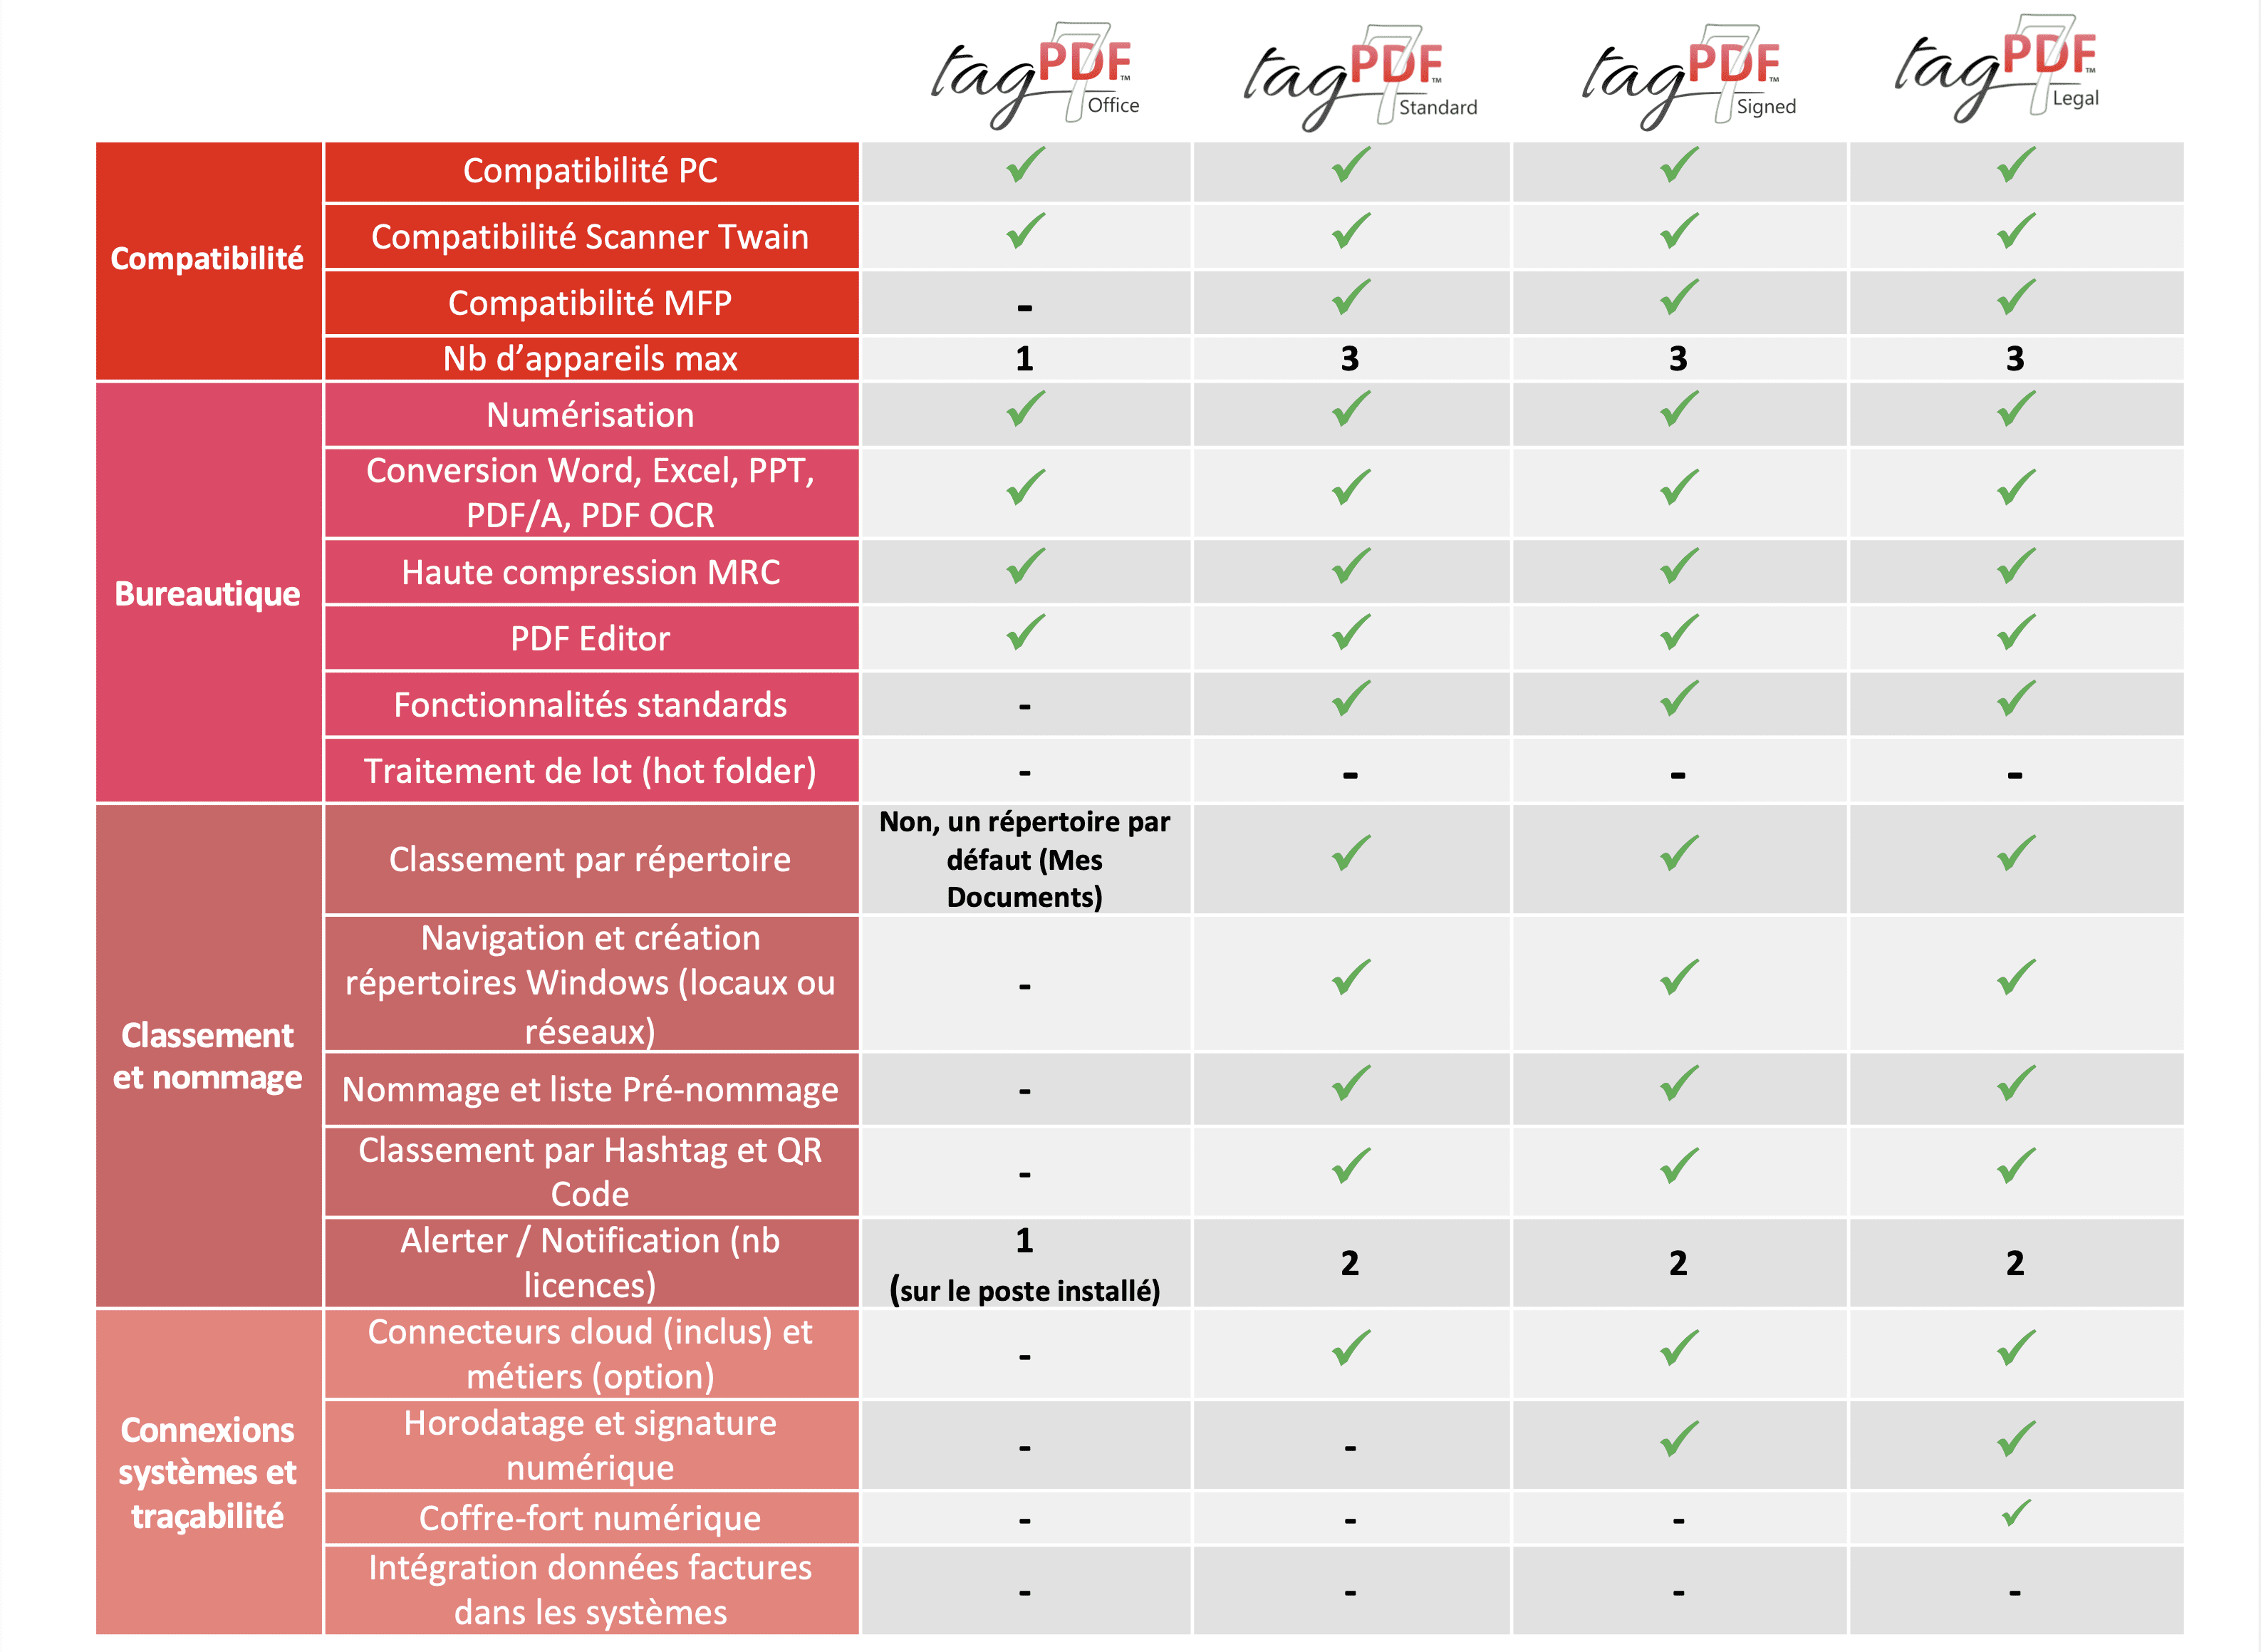 tagpdf tableau comparatif des logiciels de la gamme